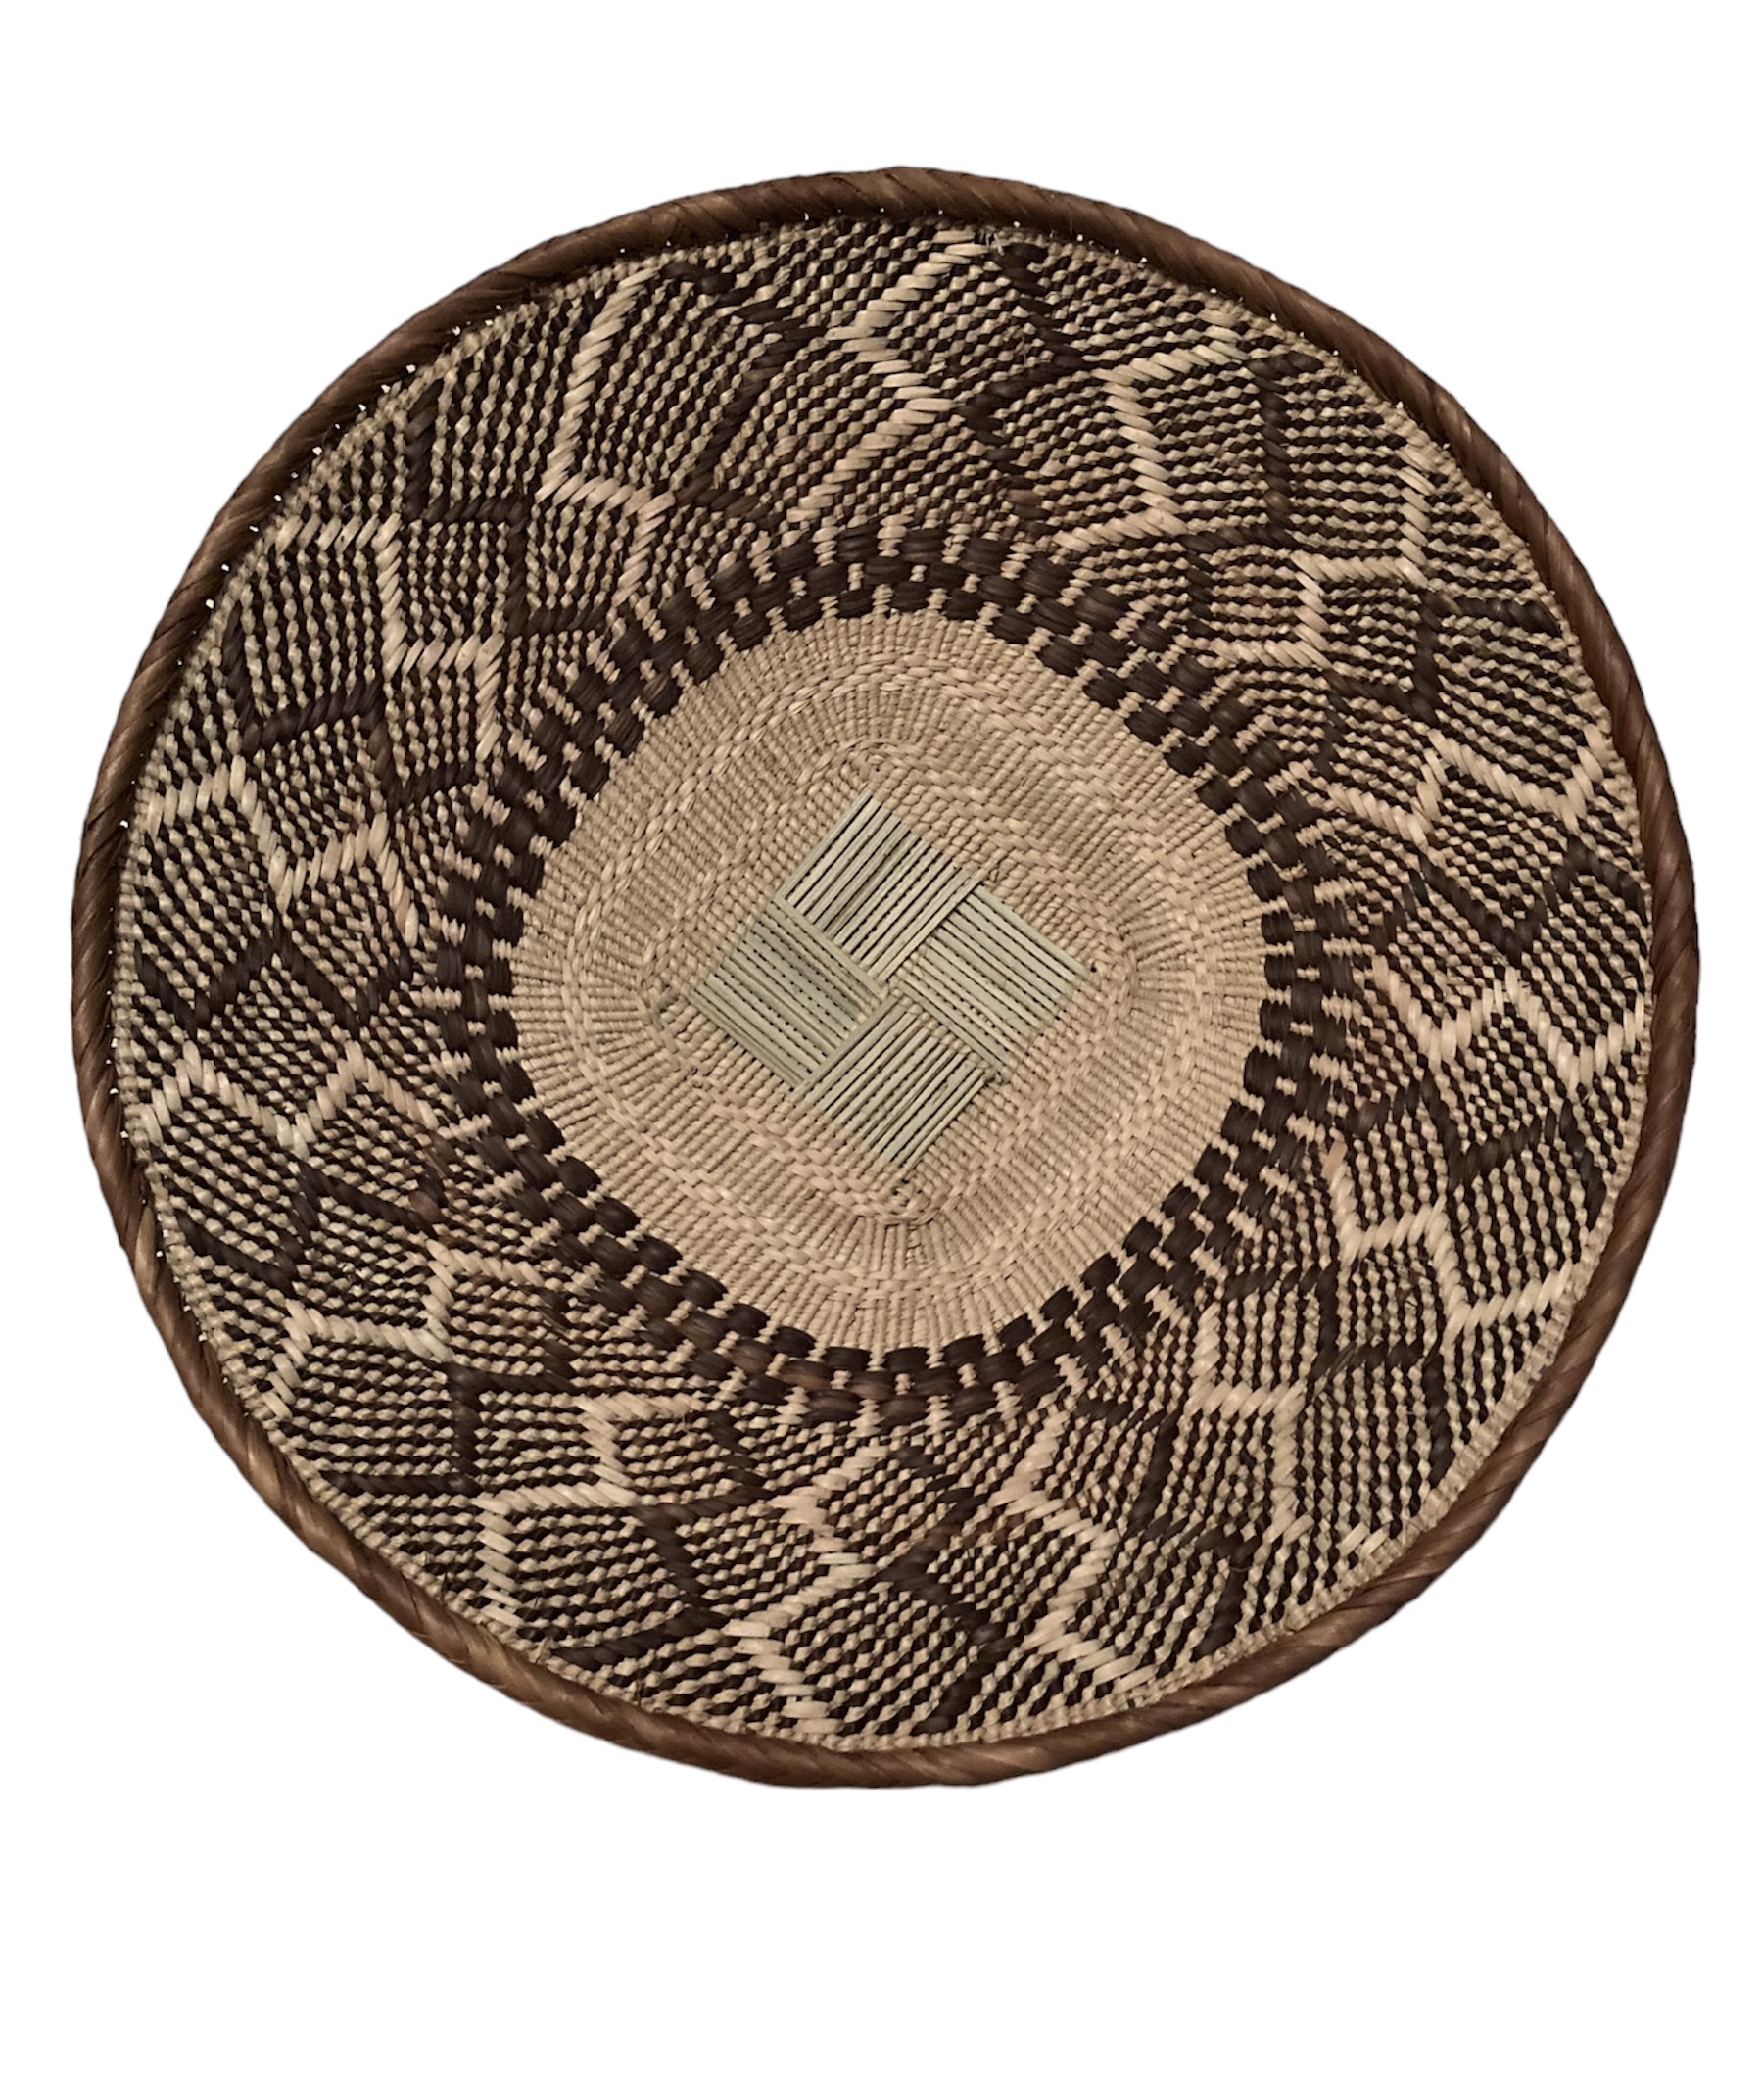 Tonga Basket from Zimbabwe - Design #009 - 15 /12\" dia.